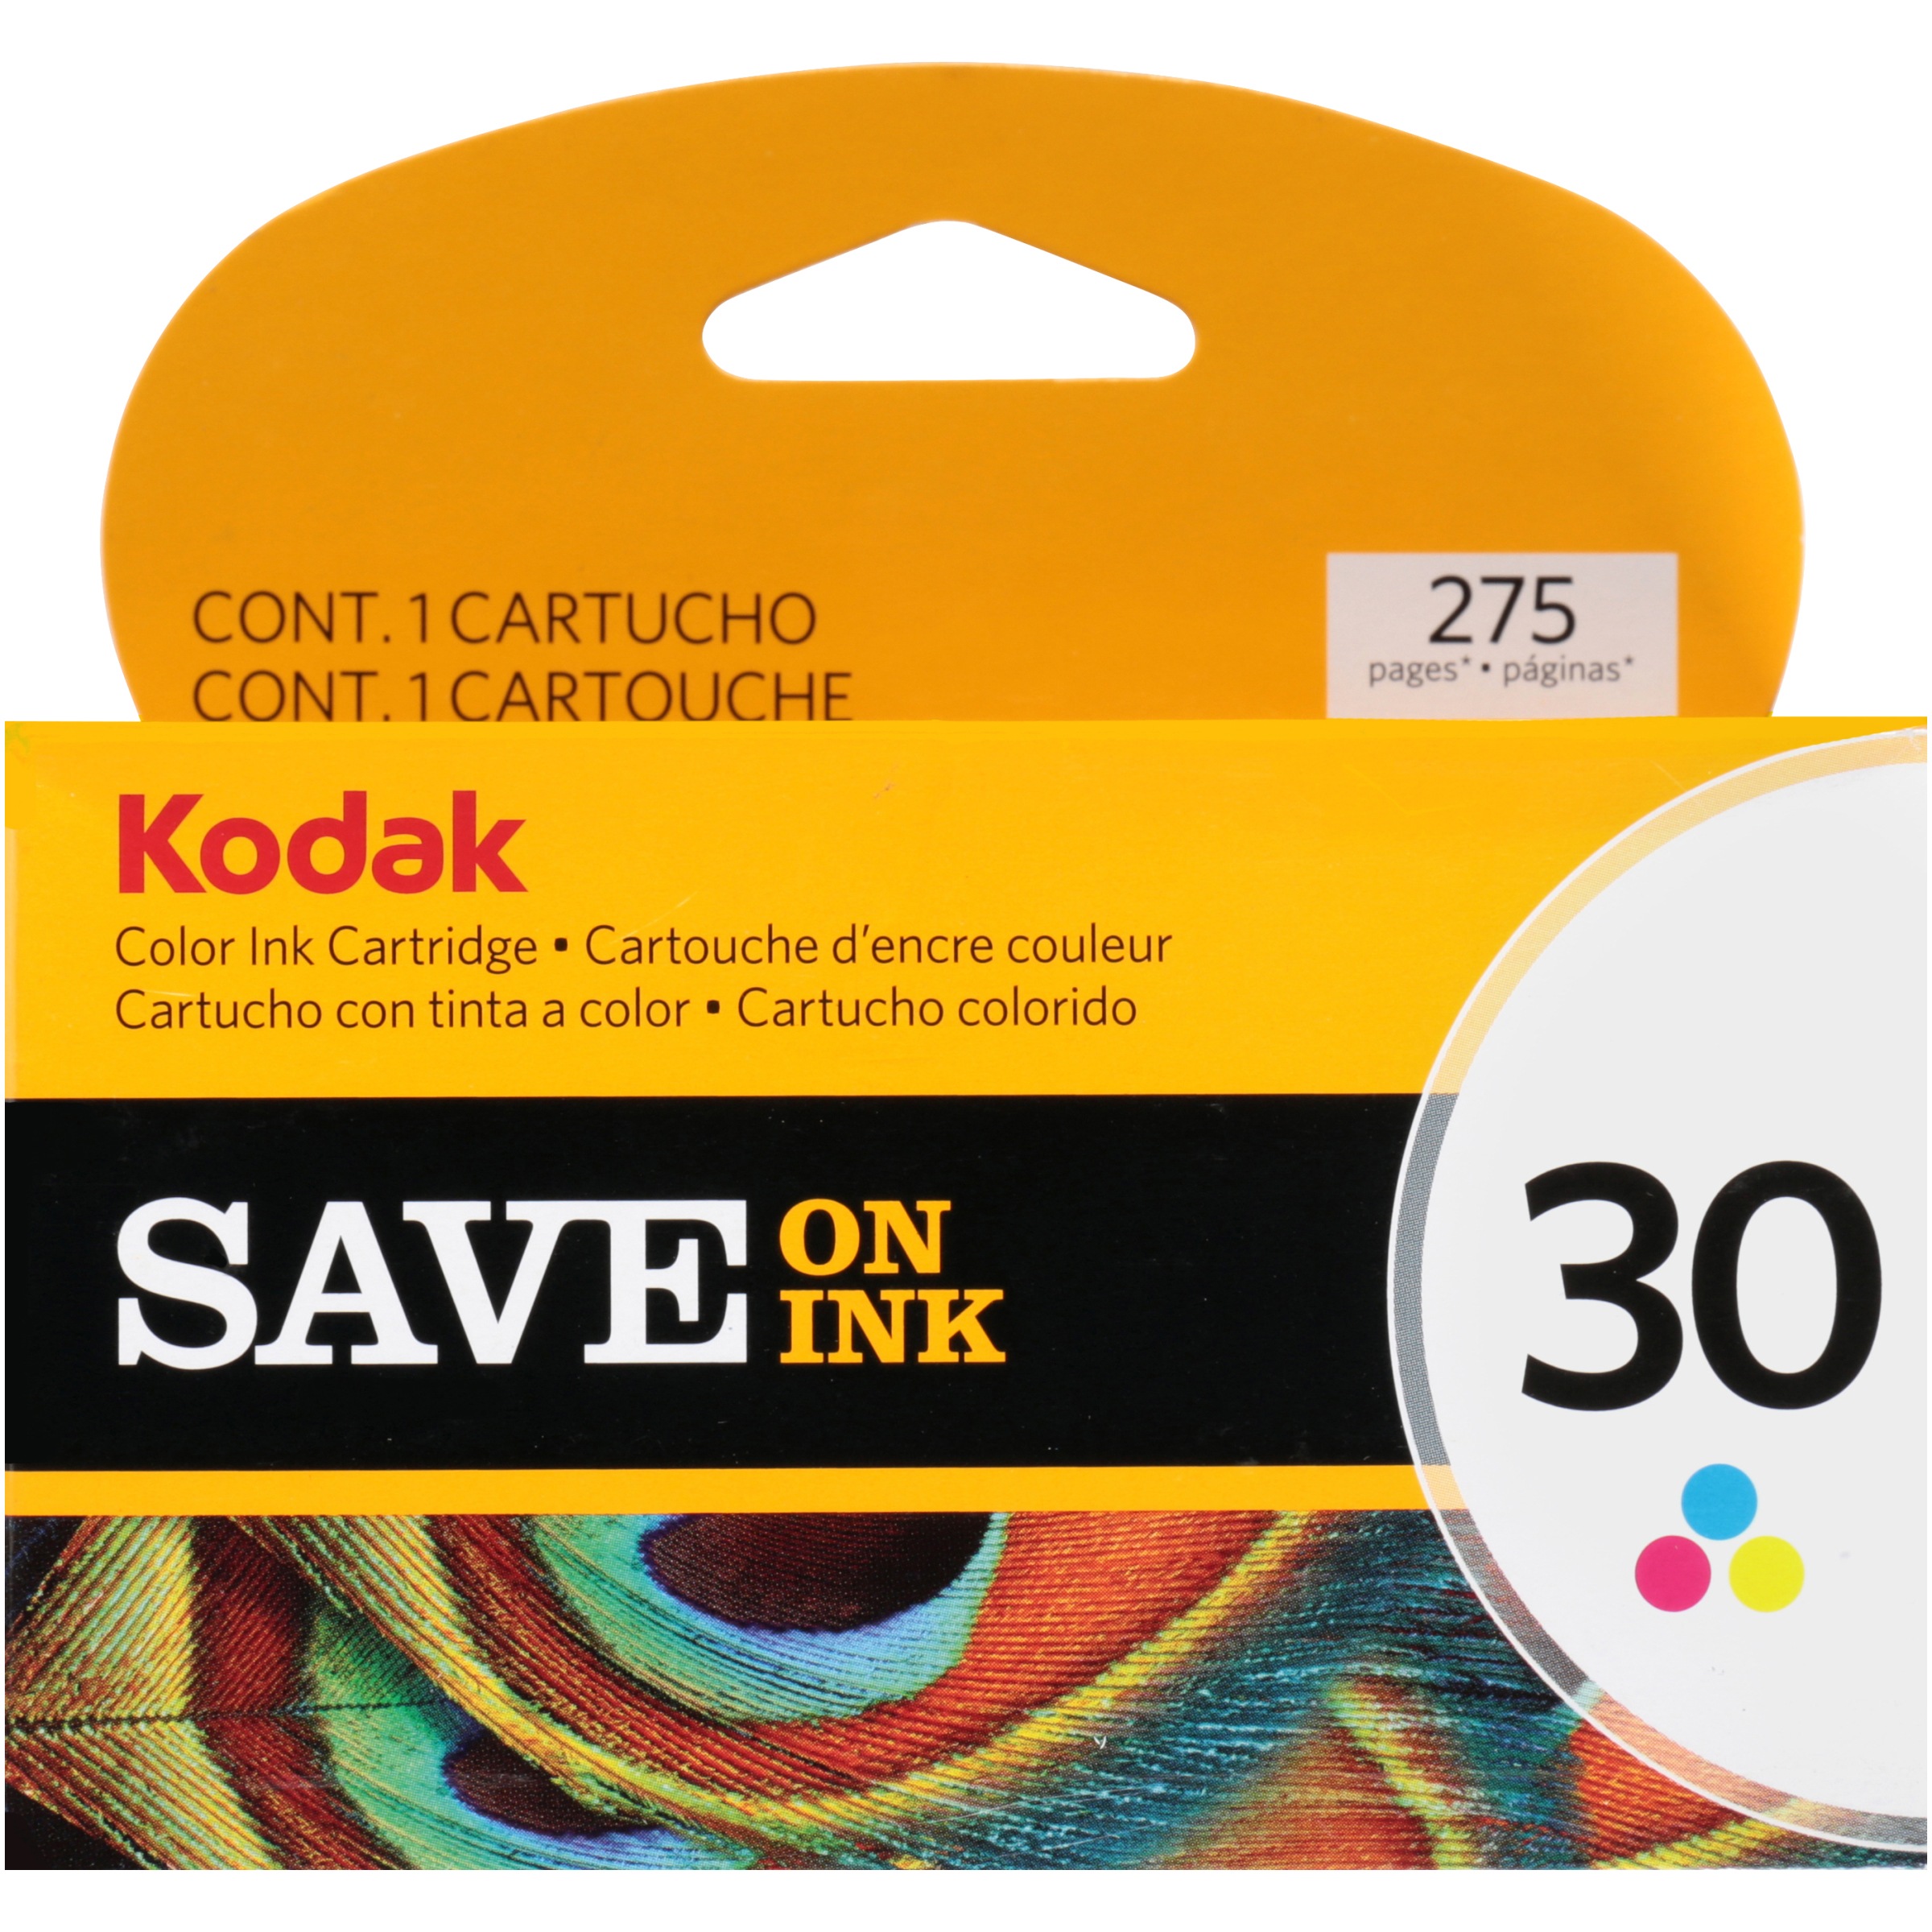 Kodak 30C Color Ink Cartridge - image 2 of 4